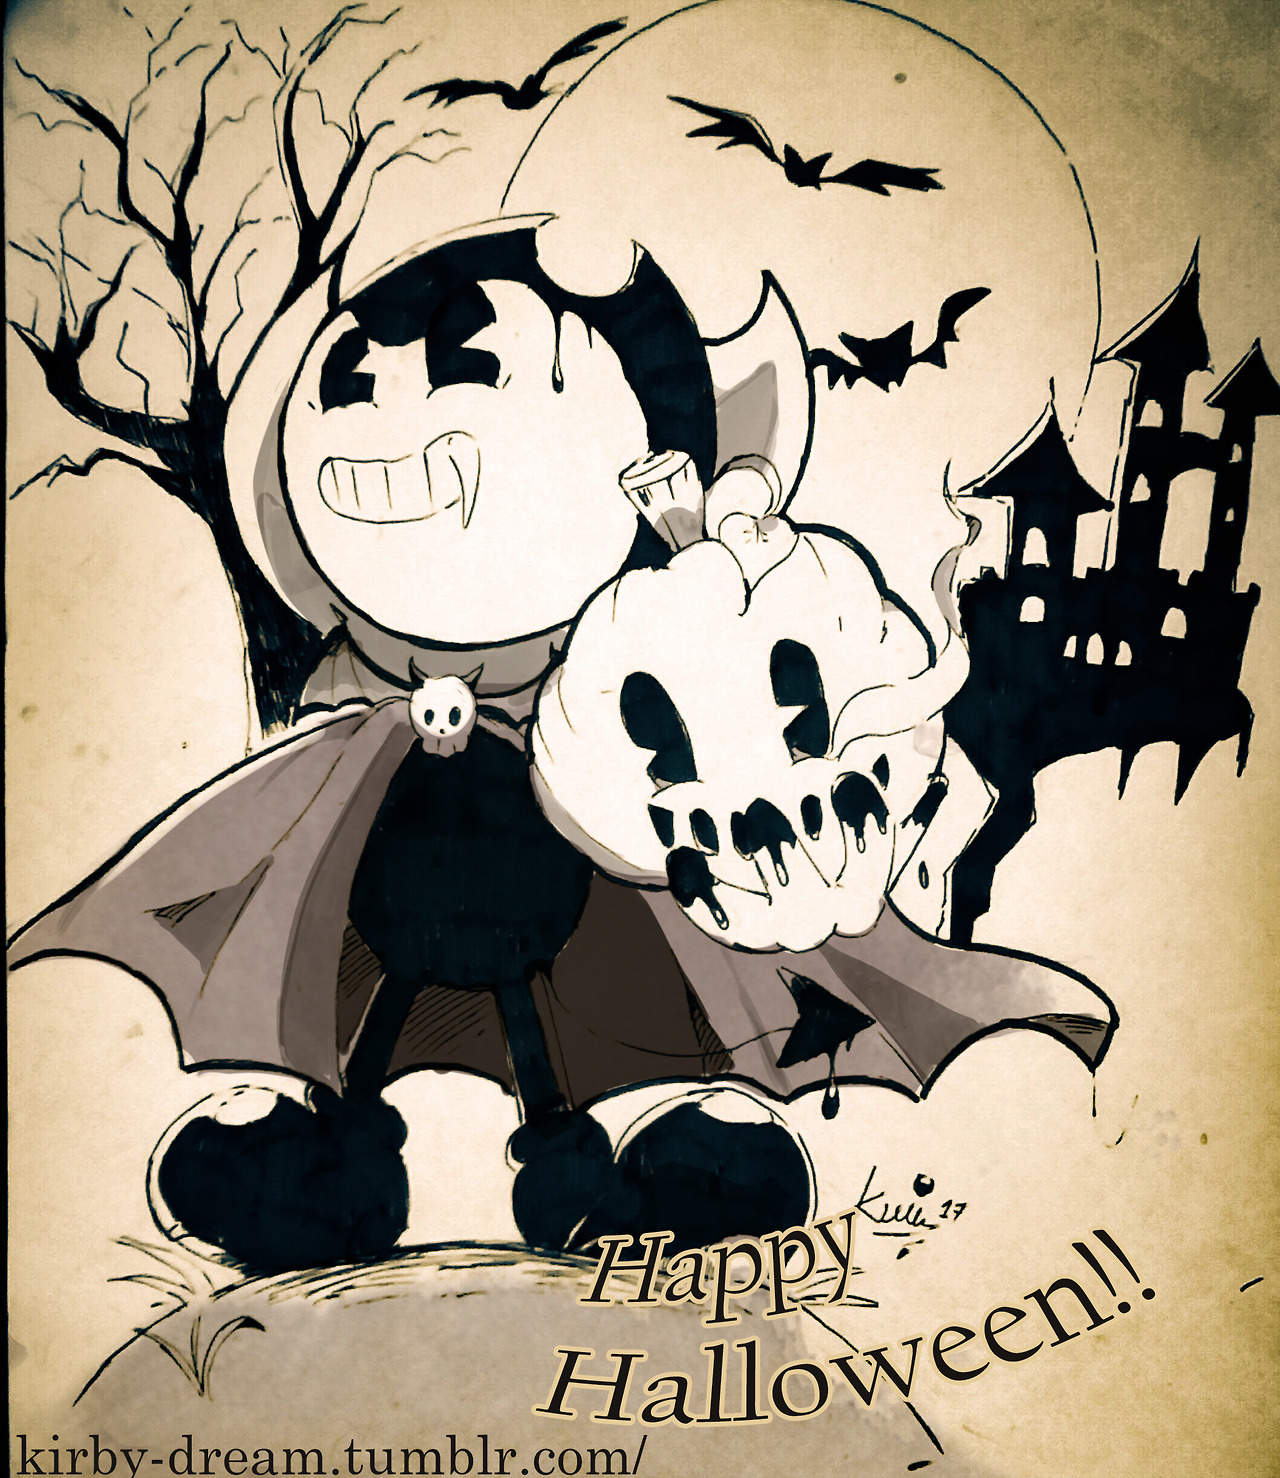 Kirby-Popstar — Bendy wishes: Happy early Halloween!